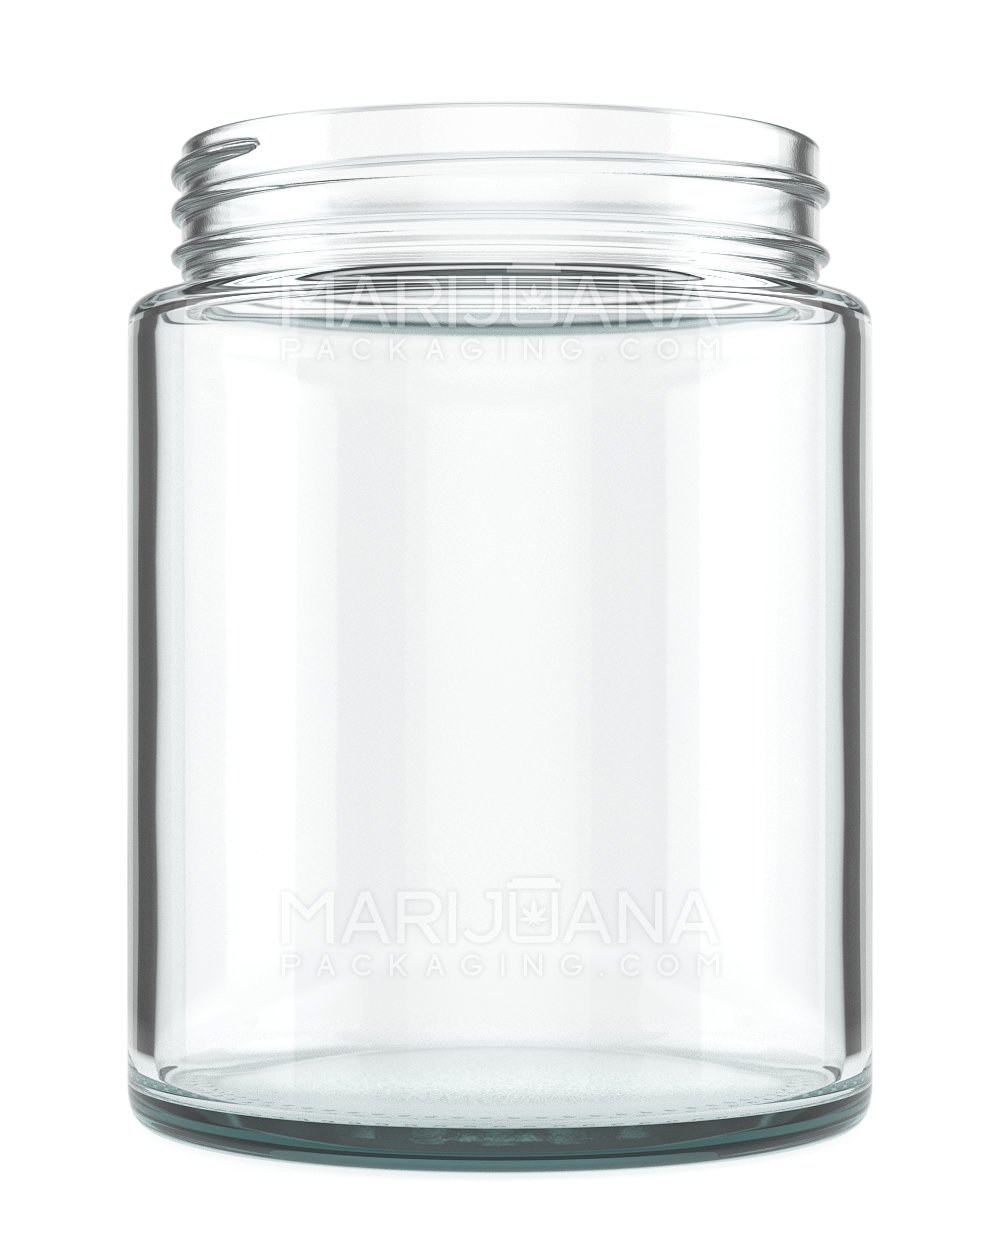 https://cdn.shopify.com/s/files/1/0039/0574/9105/products/straight-sided-glass-jars-78mm-18oz-48-count-dispensary-supply-marijuana-packaging-566887.jpg?v=1593750012&width=1000